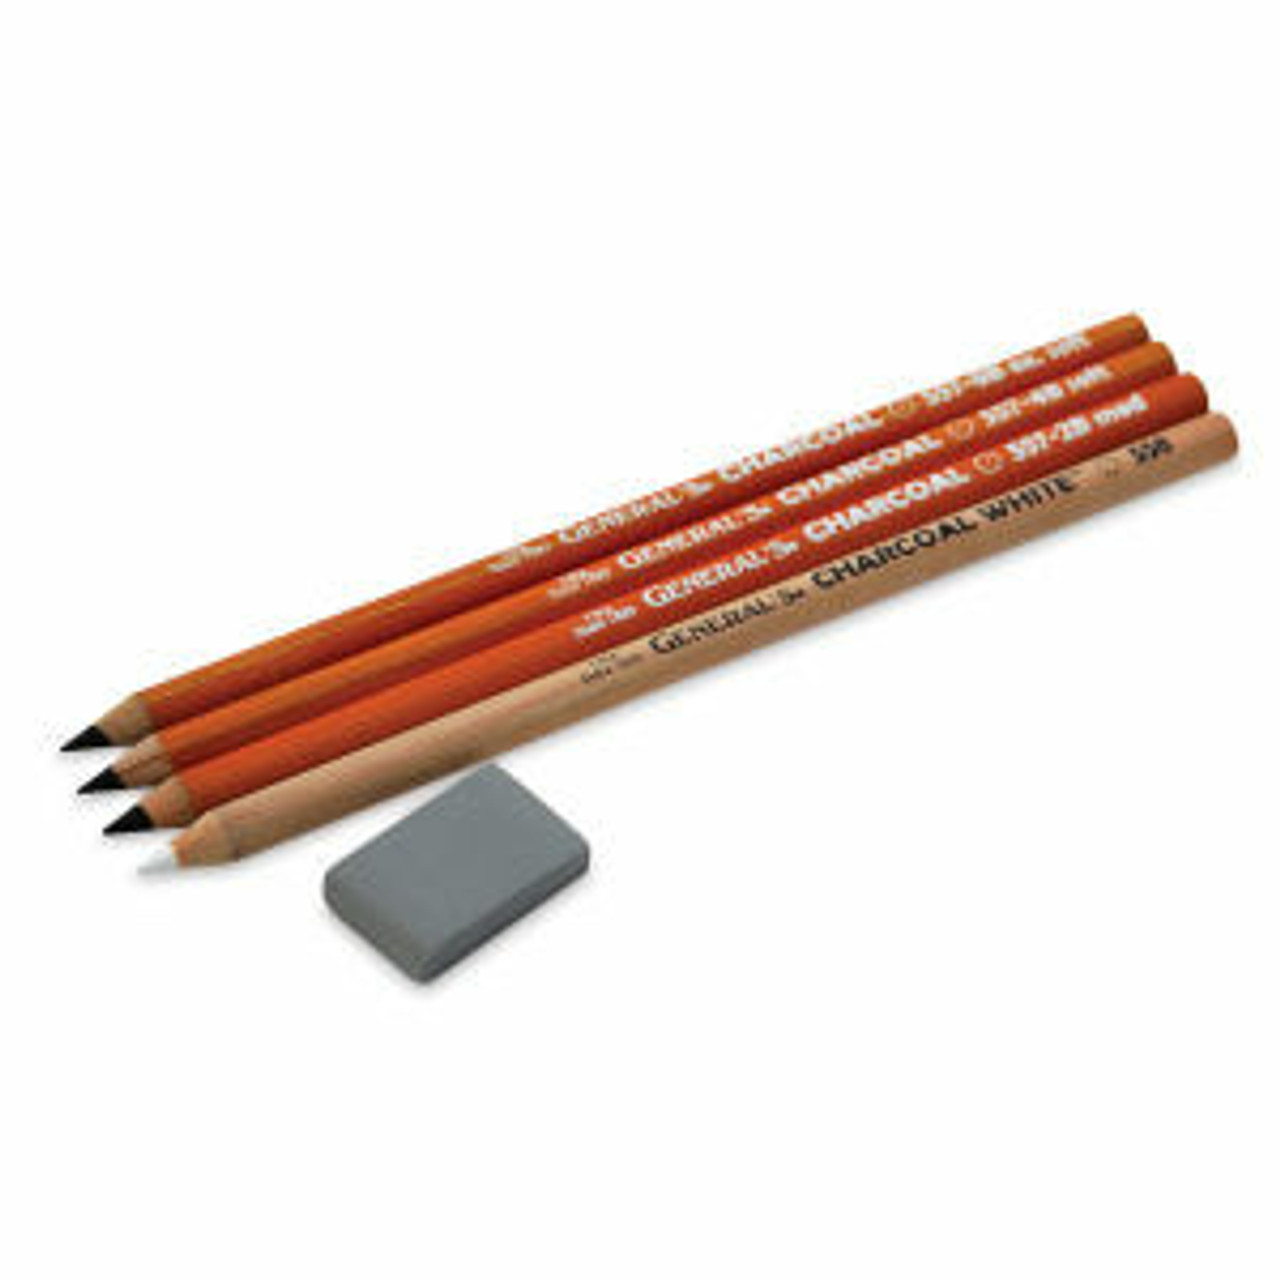 https://cdn11.bigcommerce.com/s-9uf88xhege/images/stencil/1280x1280/products/7249/26760/general-pencil-co-inc-general-pencil-charcoal-pencil-kit__31854.1679599702.jpg?c=1